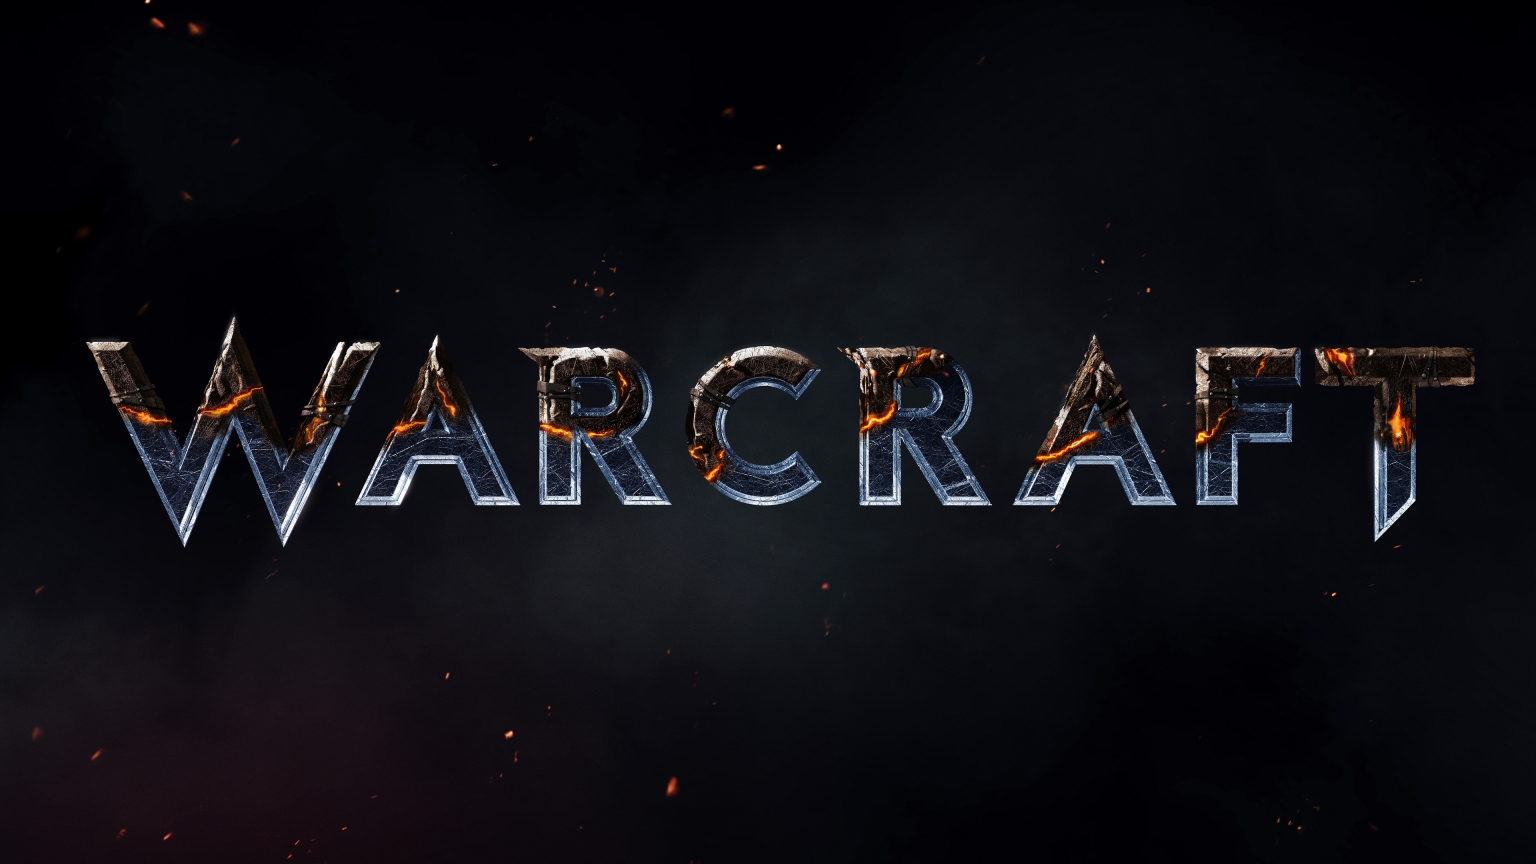 Warcraft Movie 2016 for 1536 x 864 HDTV resolution